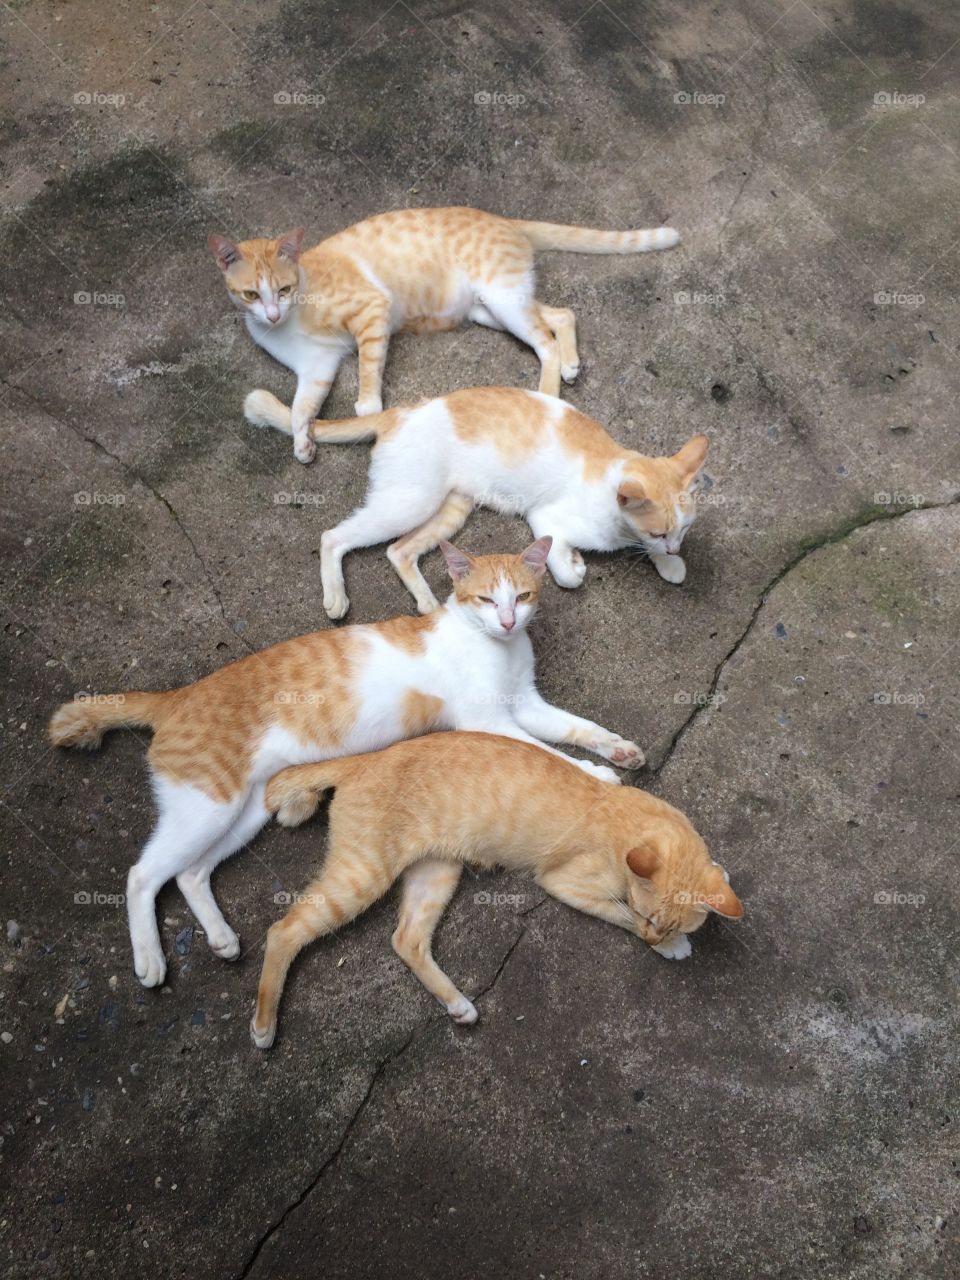 4 cats